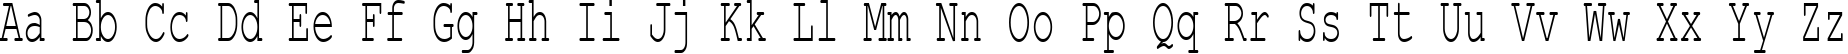 Пример написания английского алфавита шрифтом Courier New Cyr60n